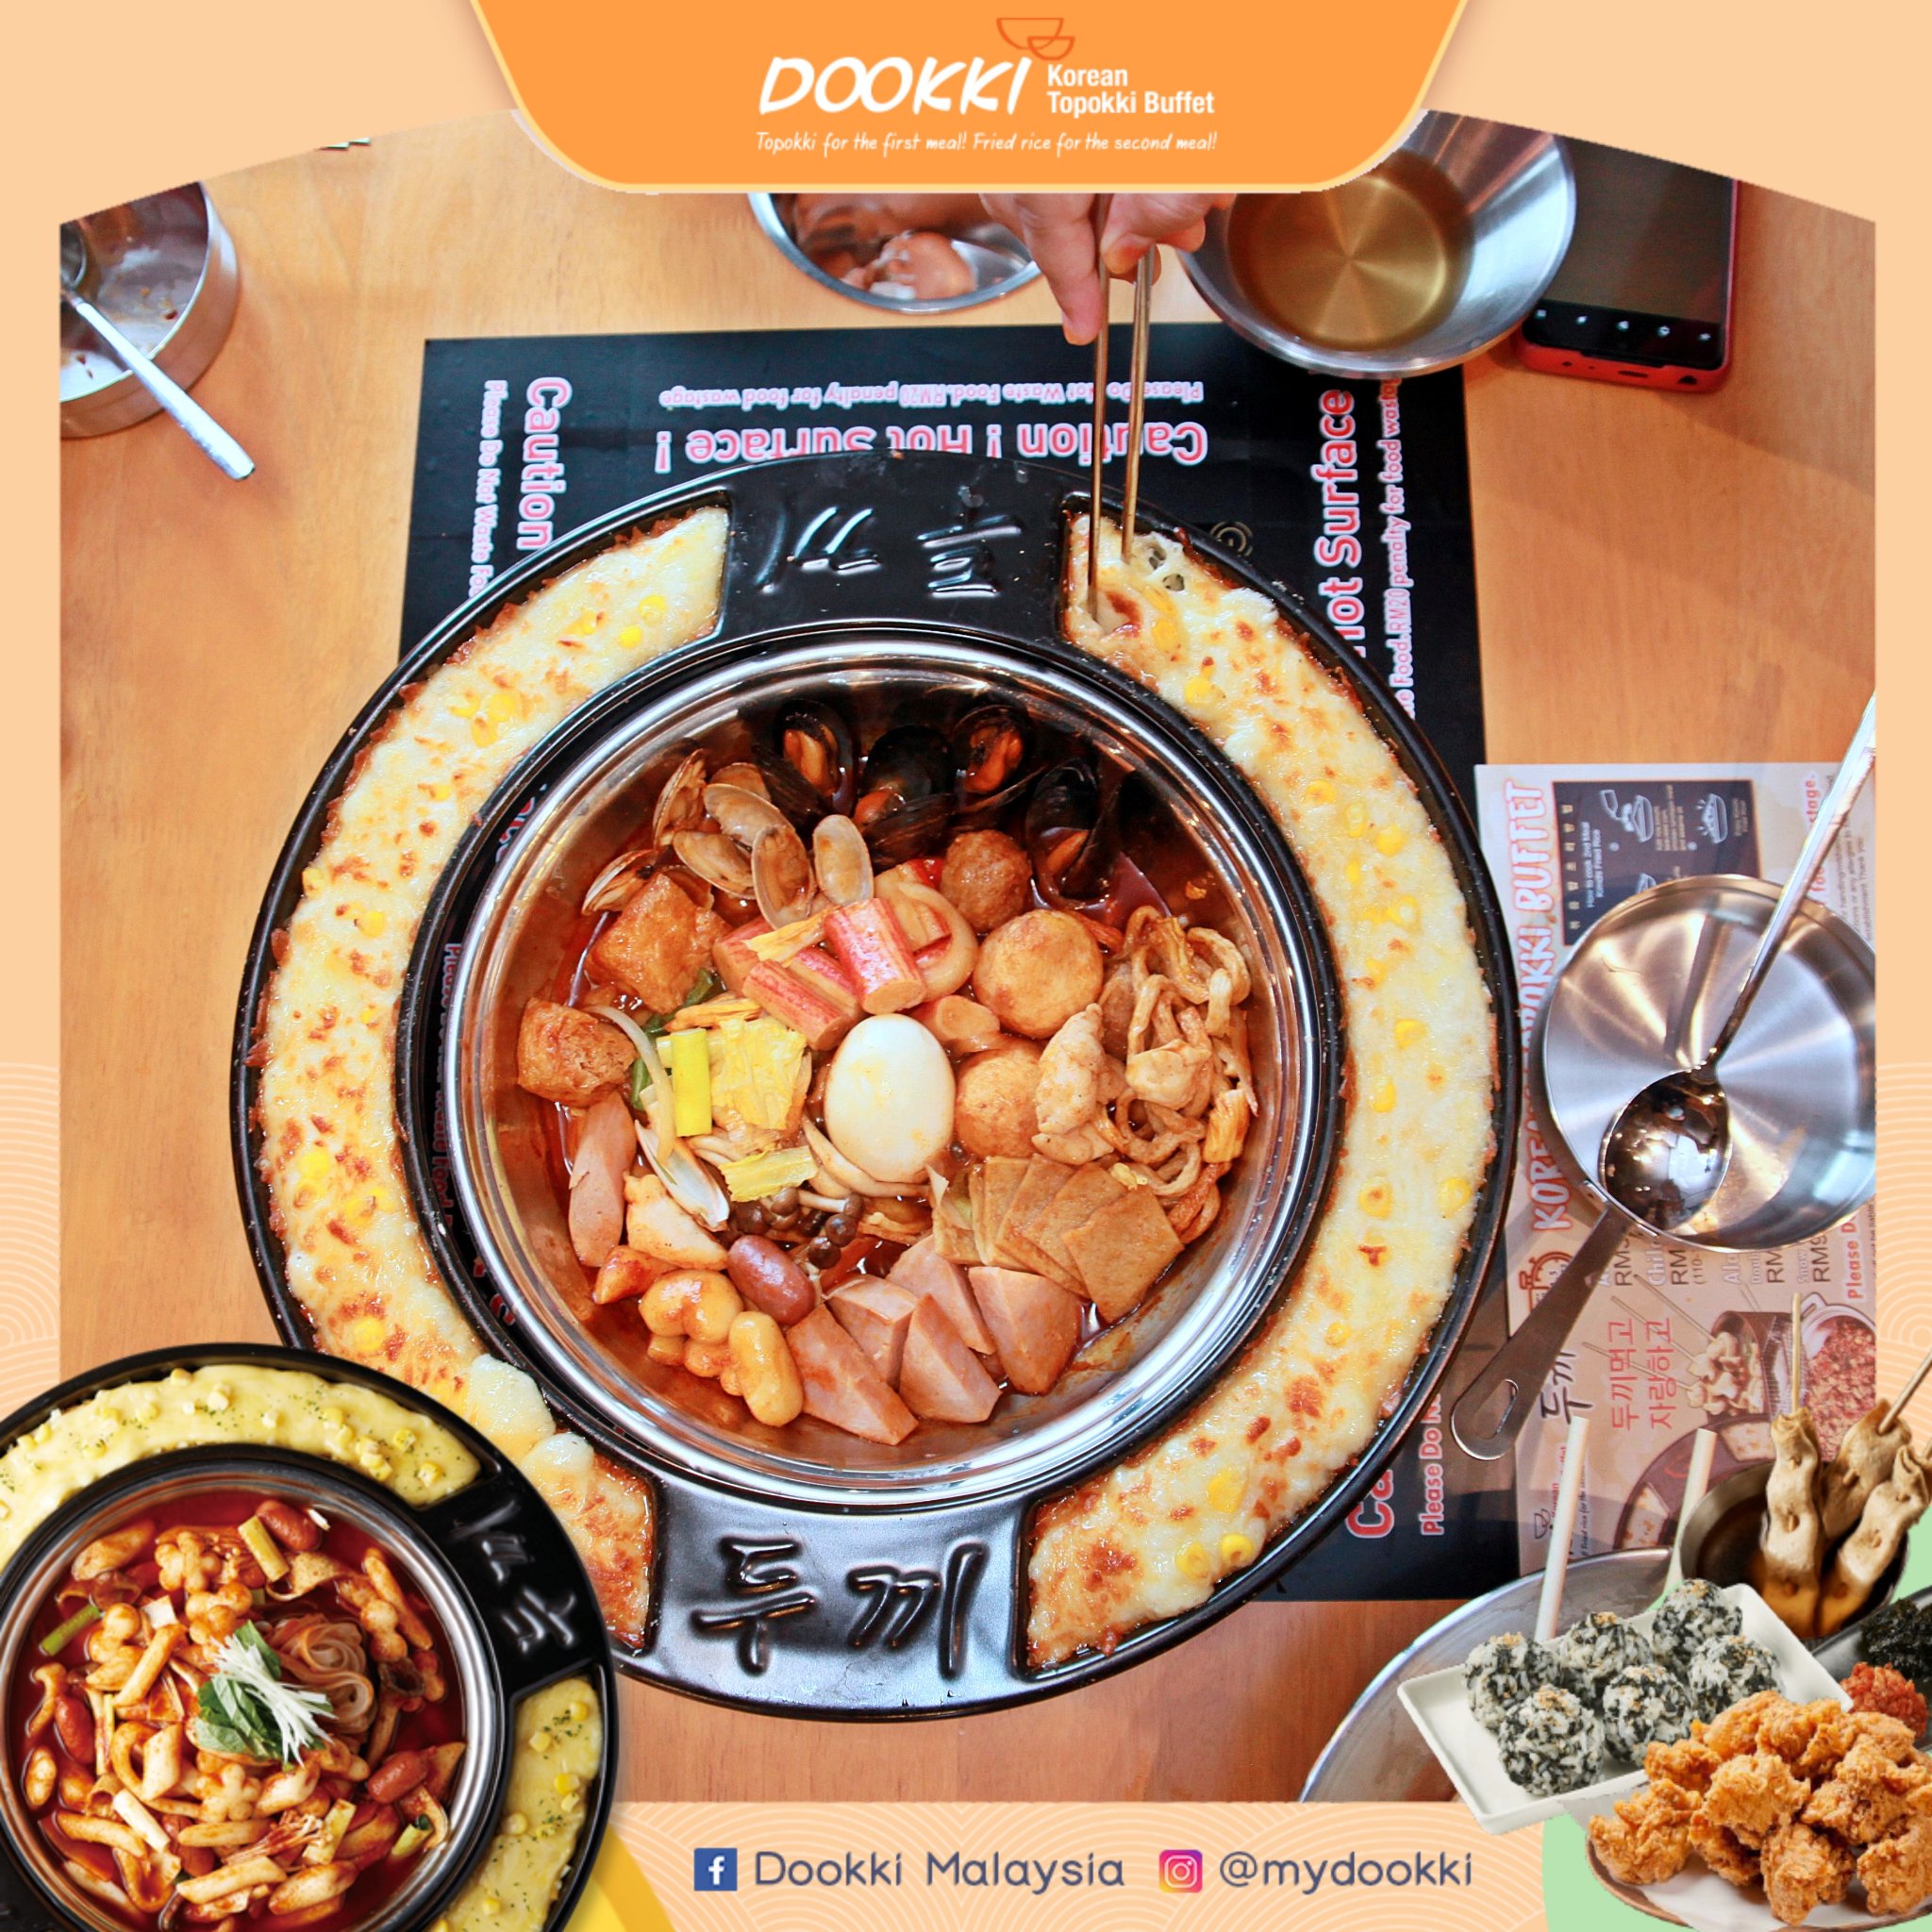 Korean Restaurant - Dookki